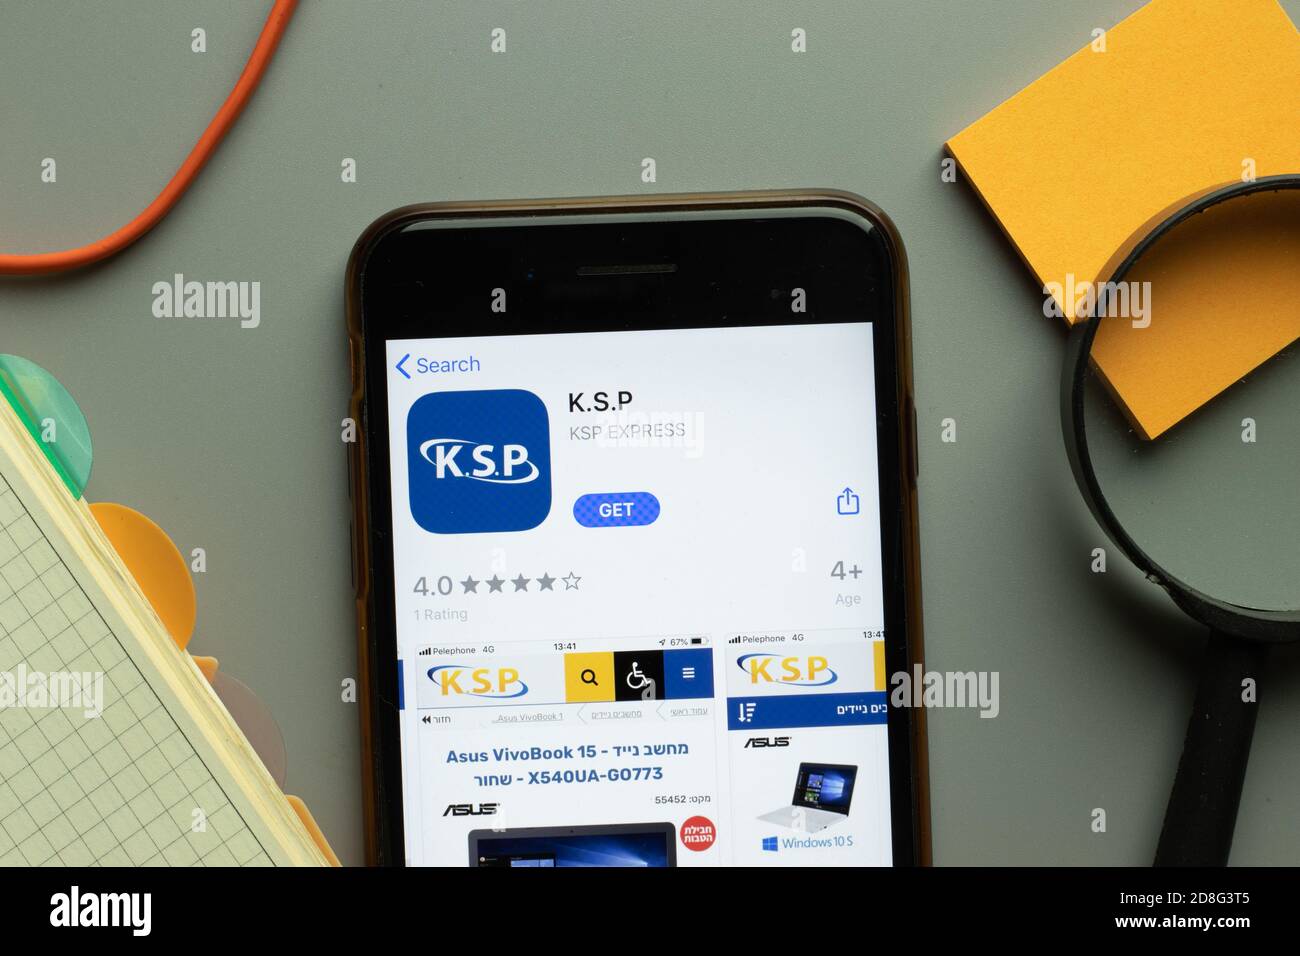 New York, USA - 26 October 2020: K.S.P. KSP mobile app logo on phone screen close up, Illustrative Editorial Stock Photo